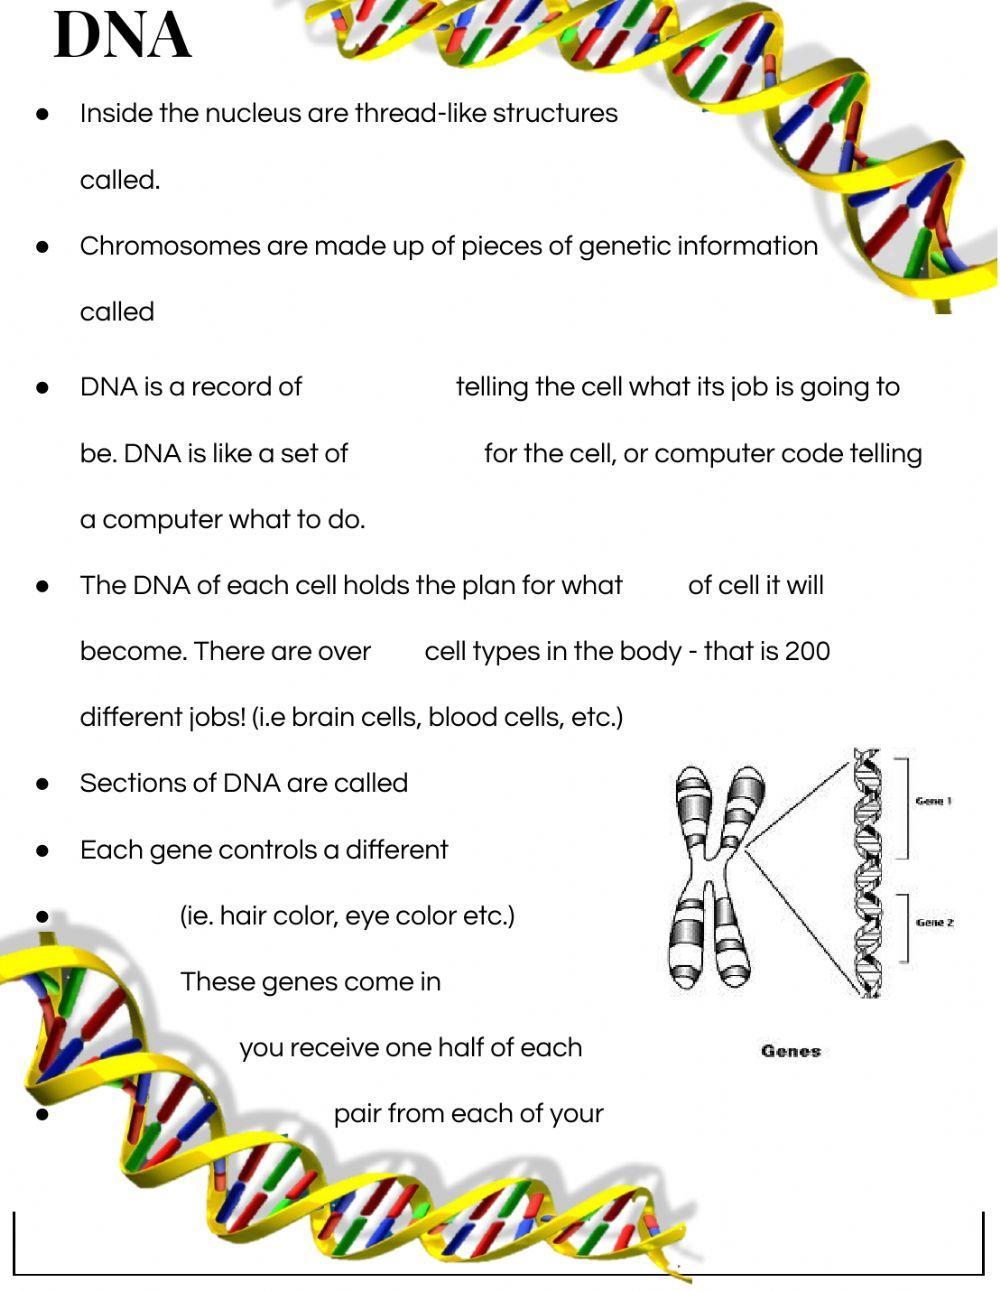 DNA basic vocabulary